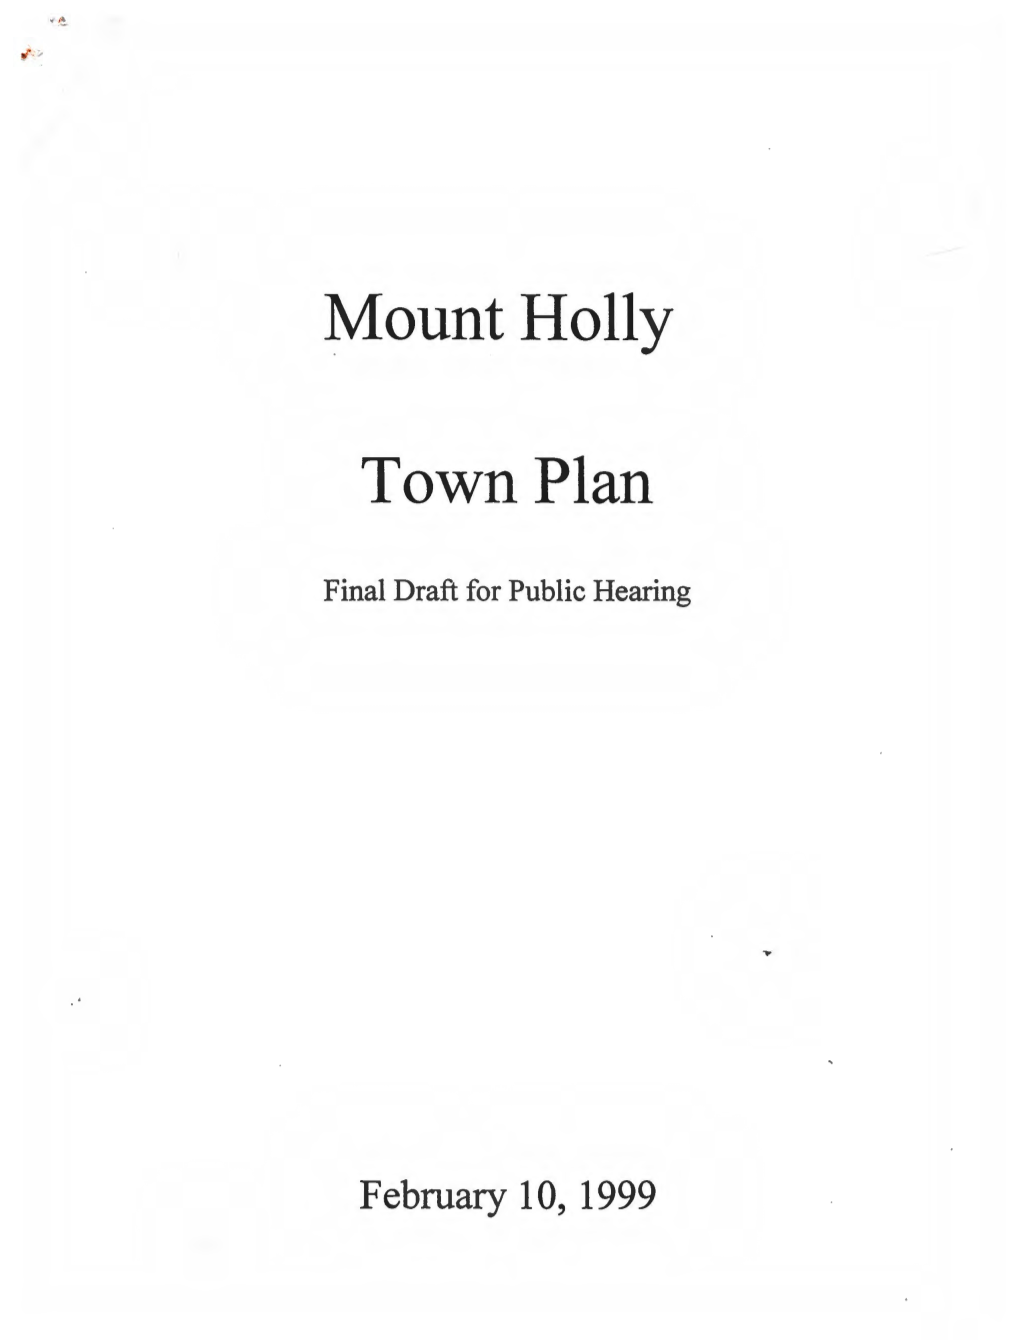 Mount Holly Town Plan